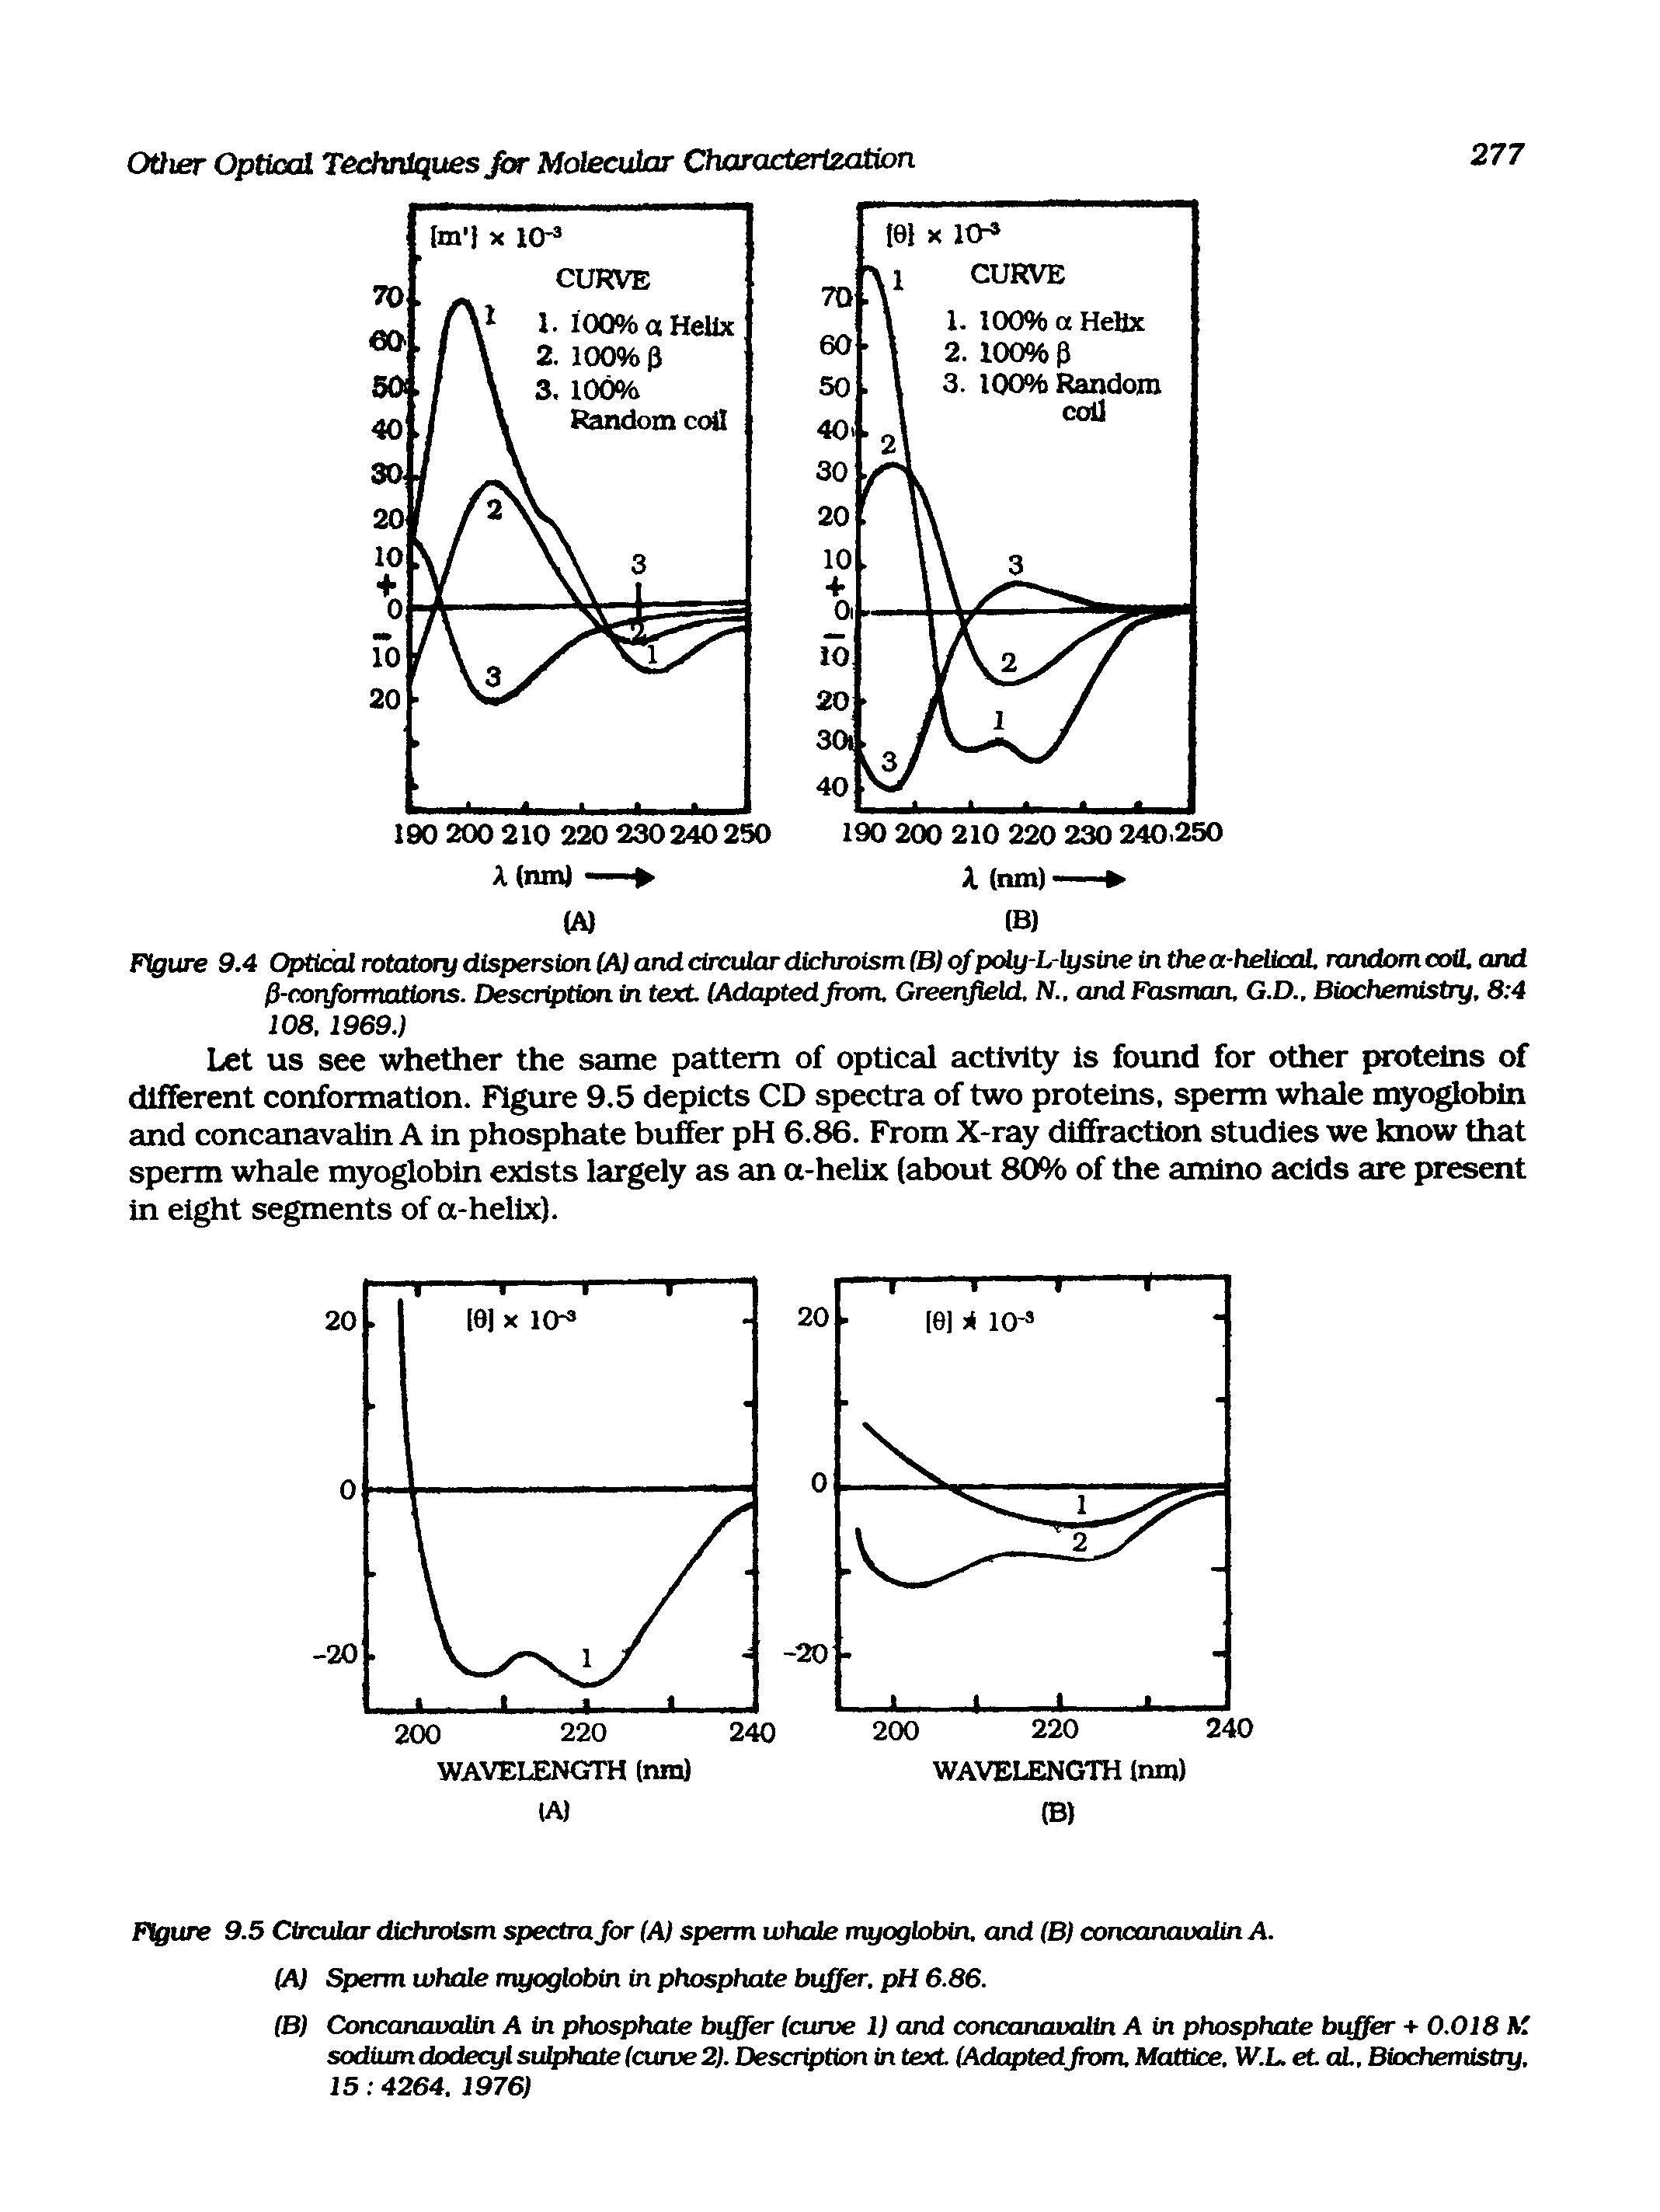 Figure 9.5 Circular dichroism spectra for (A/ sperm whale myoglobin, and (B) concanavalin A.